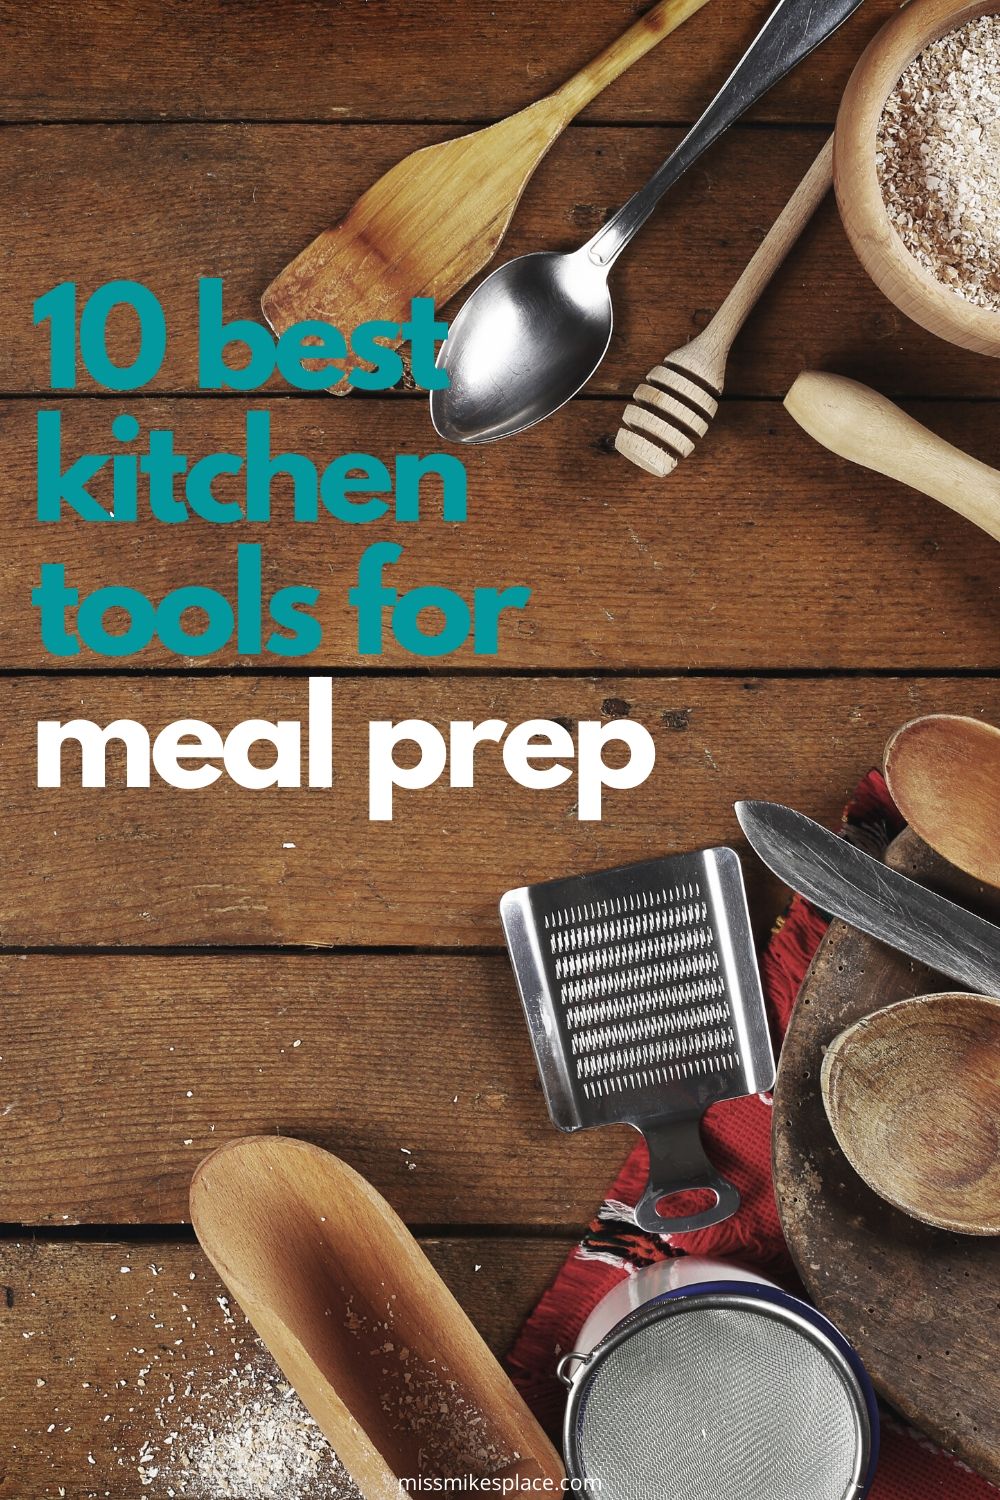 https://missmikesplace.com/wp-content/uploads/2020/06/kitchen-tools-for-meal-prep.jpg